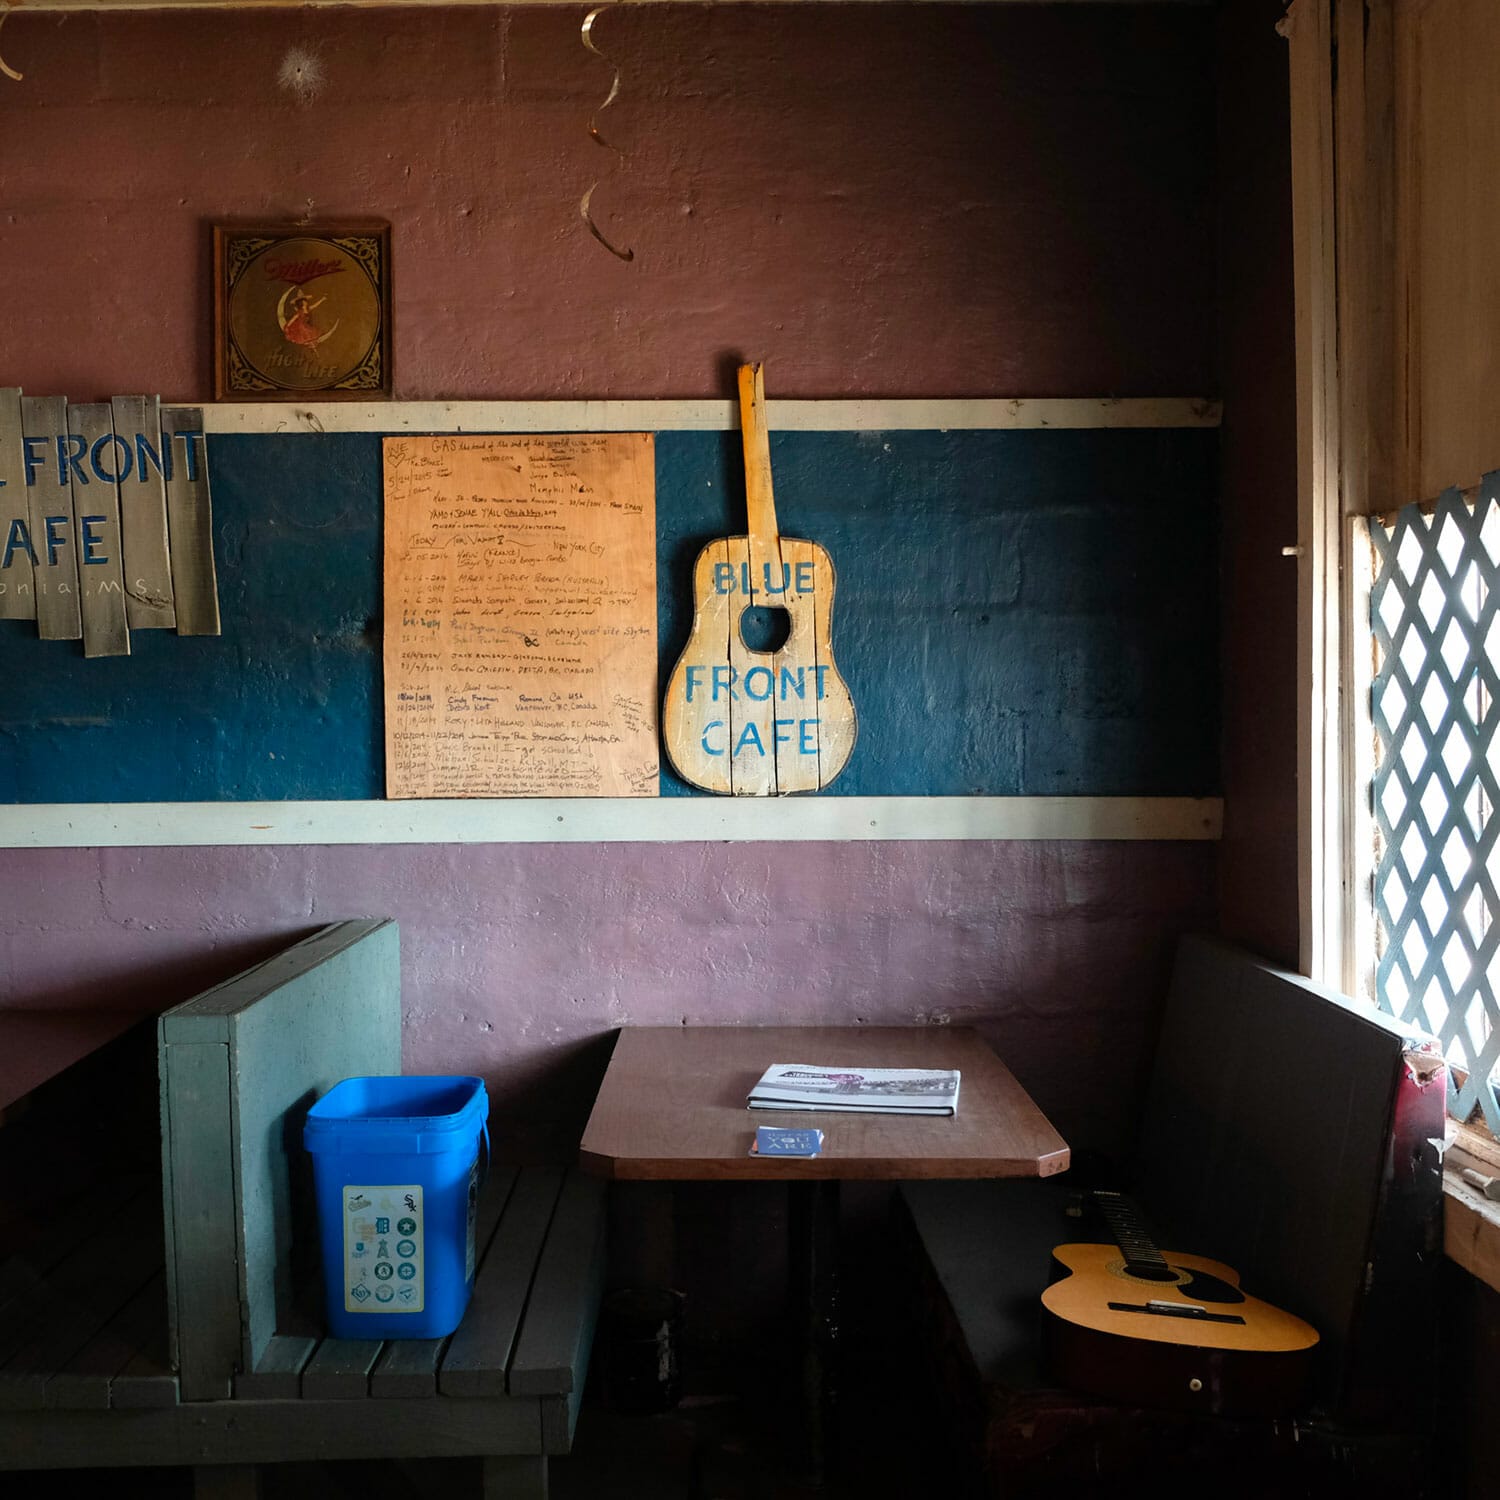 Blue Front Café, Bentonia, Mississippi